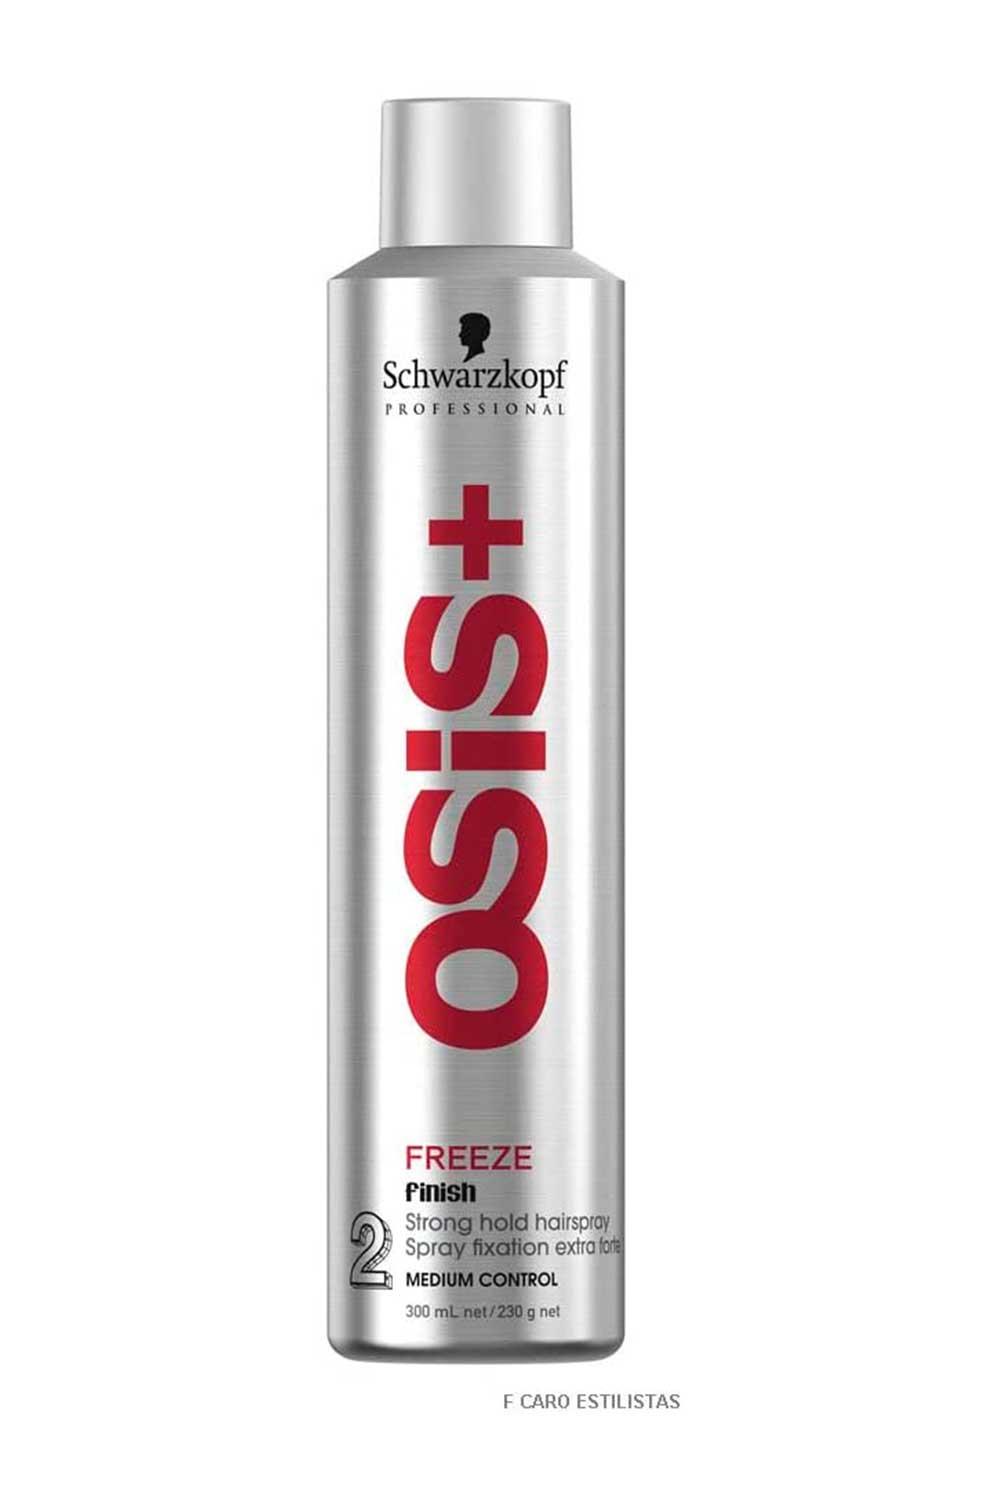 Osisplus. Spray fijación fuerte Osis+, Schwarzkopf Professional